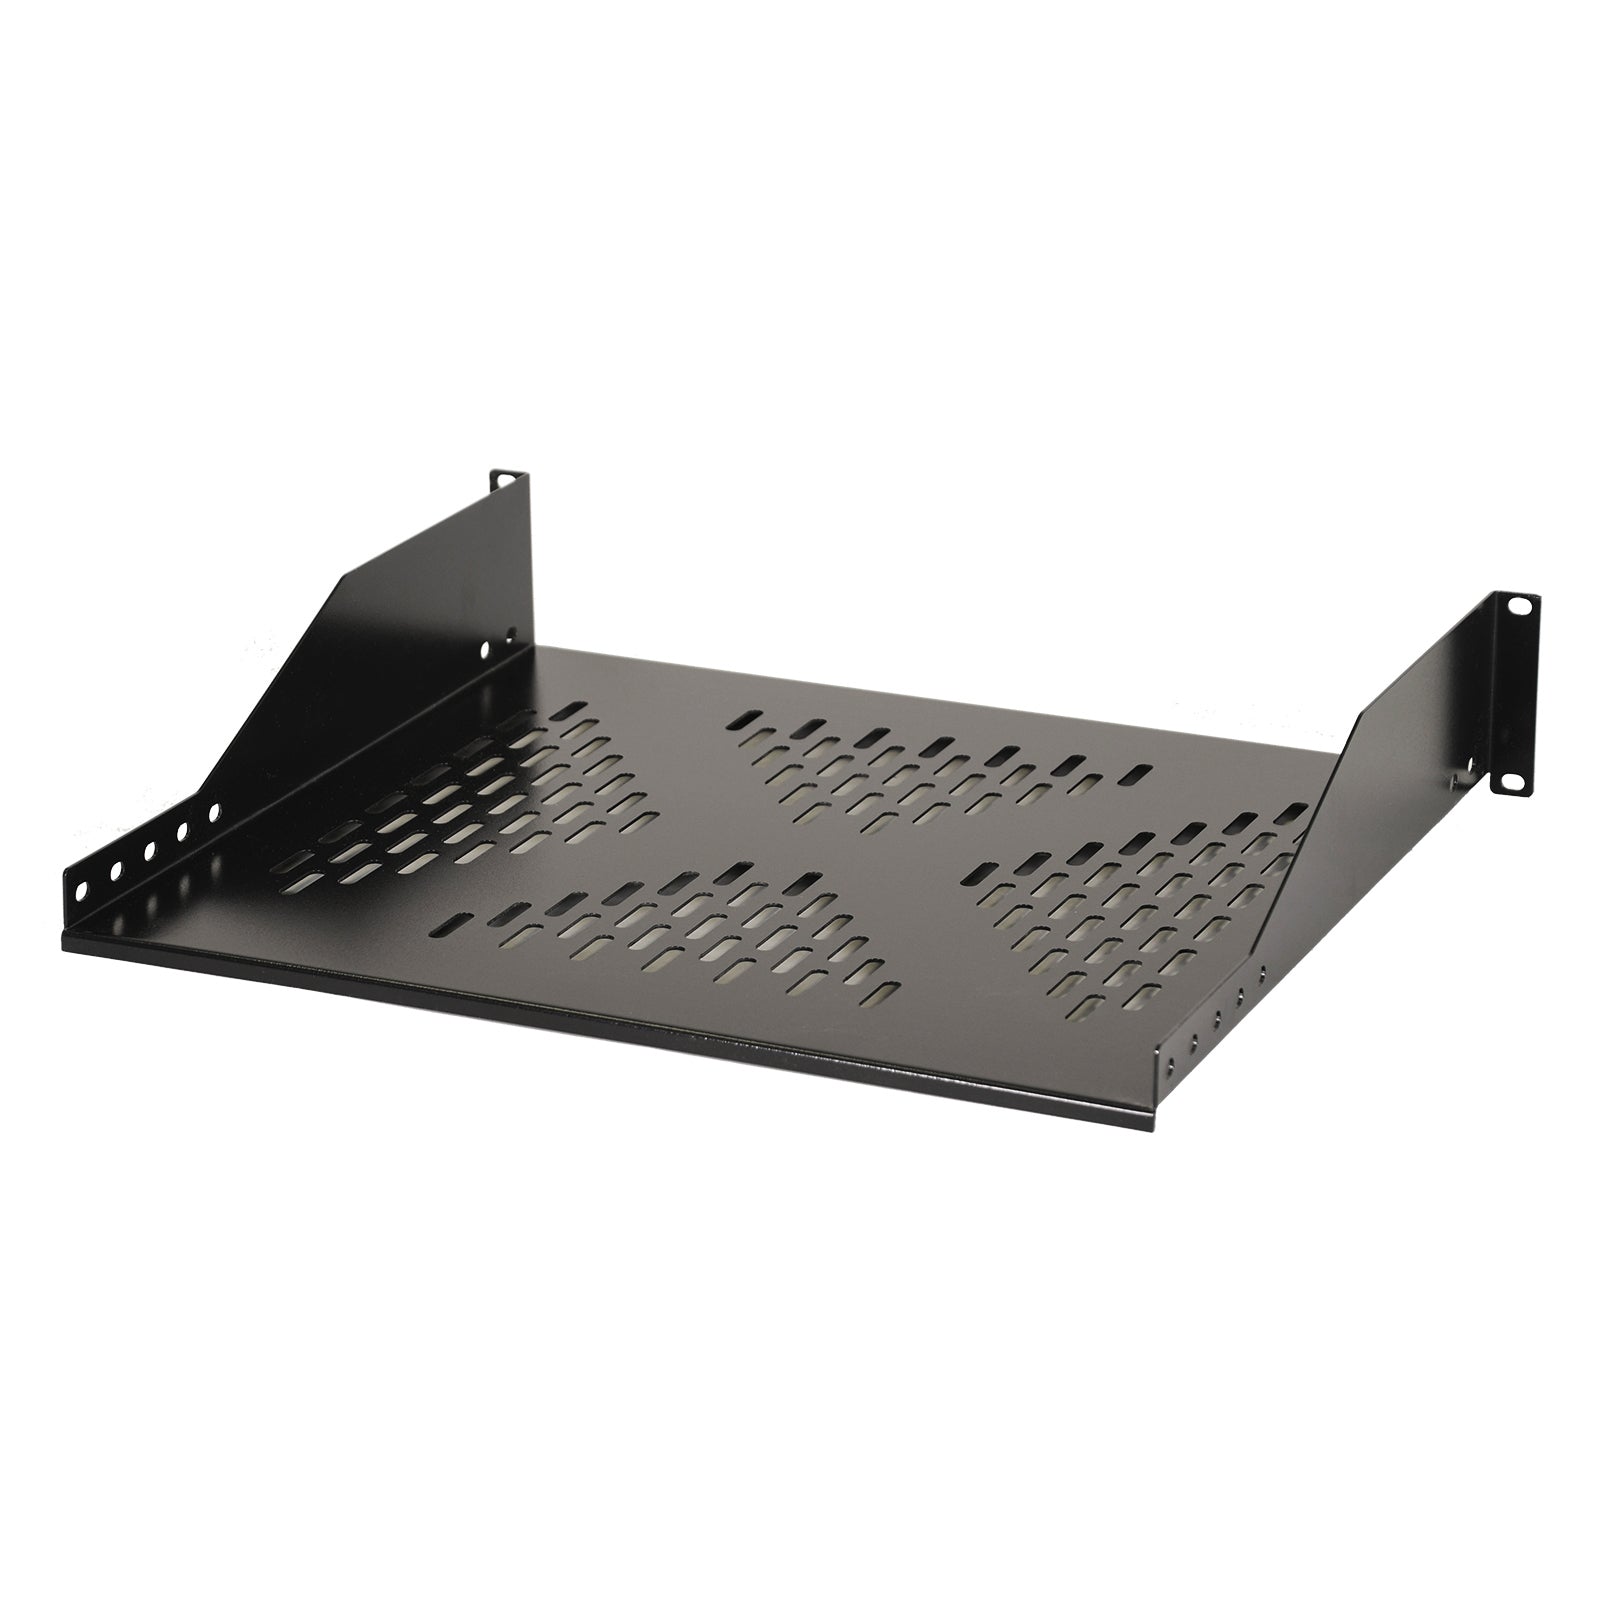 Aeons Premium 2U Server Rack Mount Vented Cantilever Shelf, 16-inch Depth, Heavy Duty